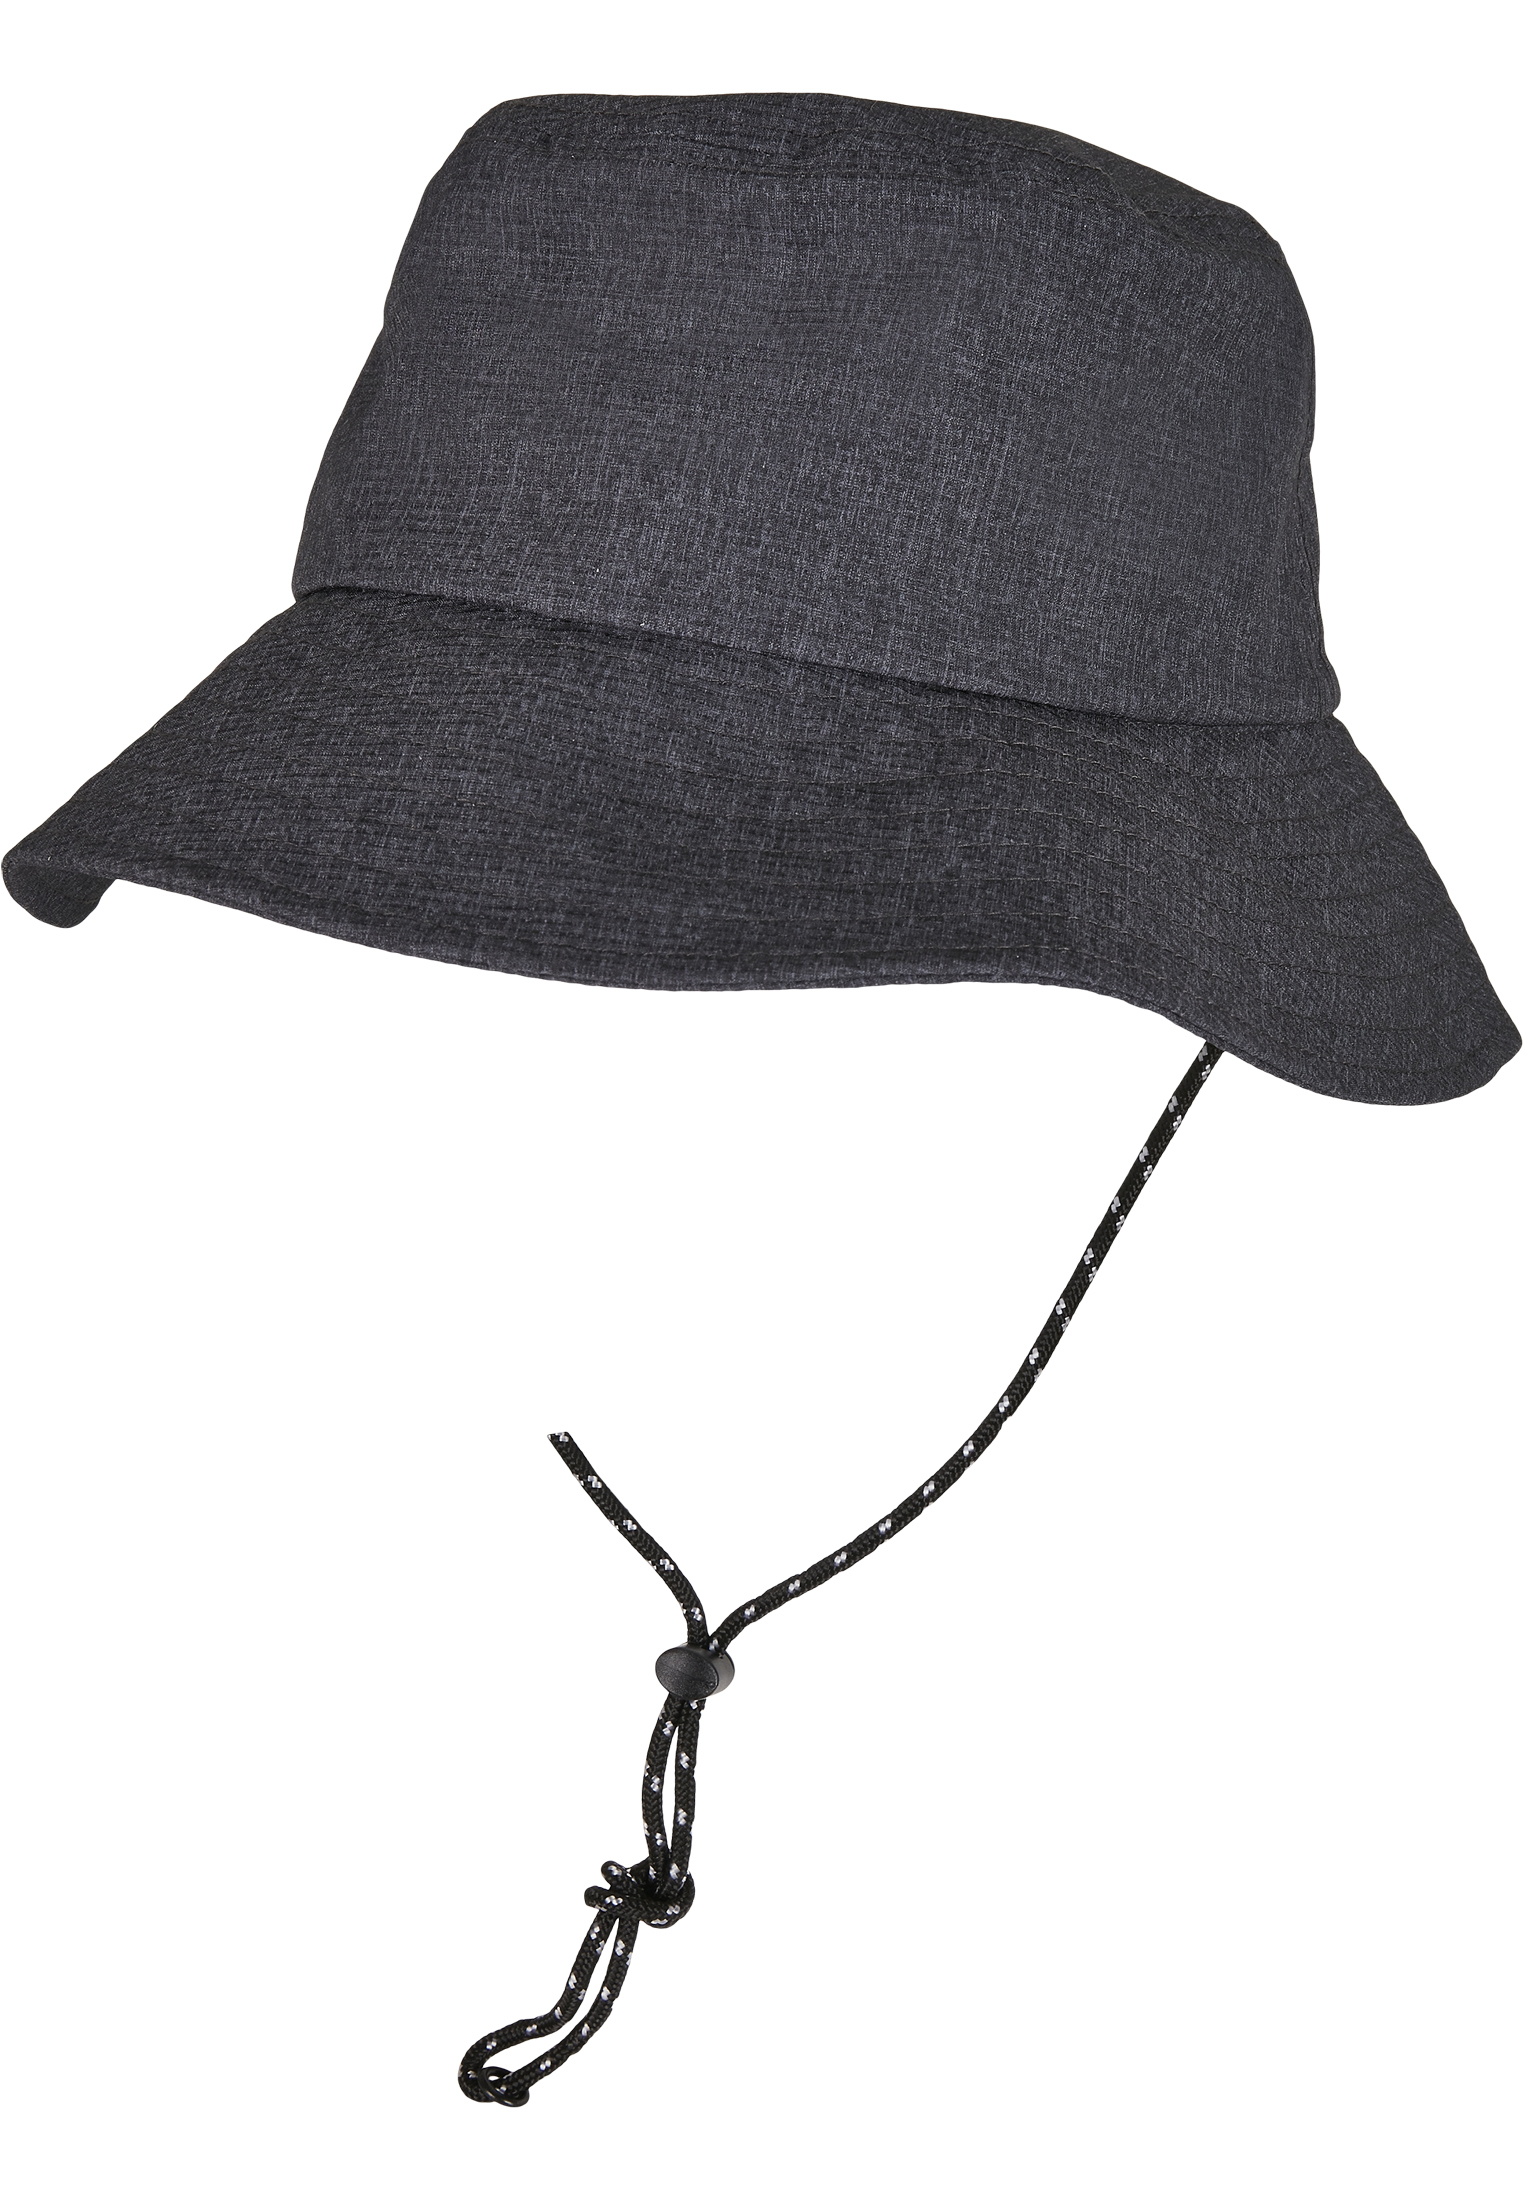 Hat-5003AB Flexfit Bucket Adjustable